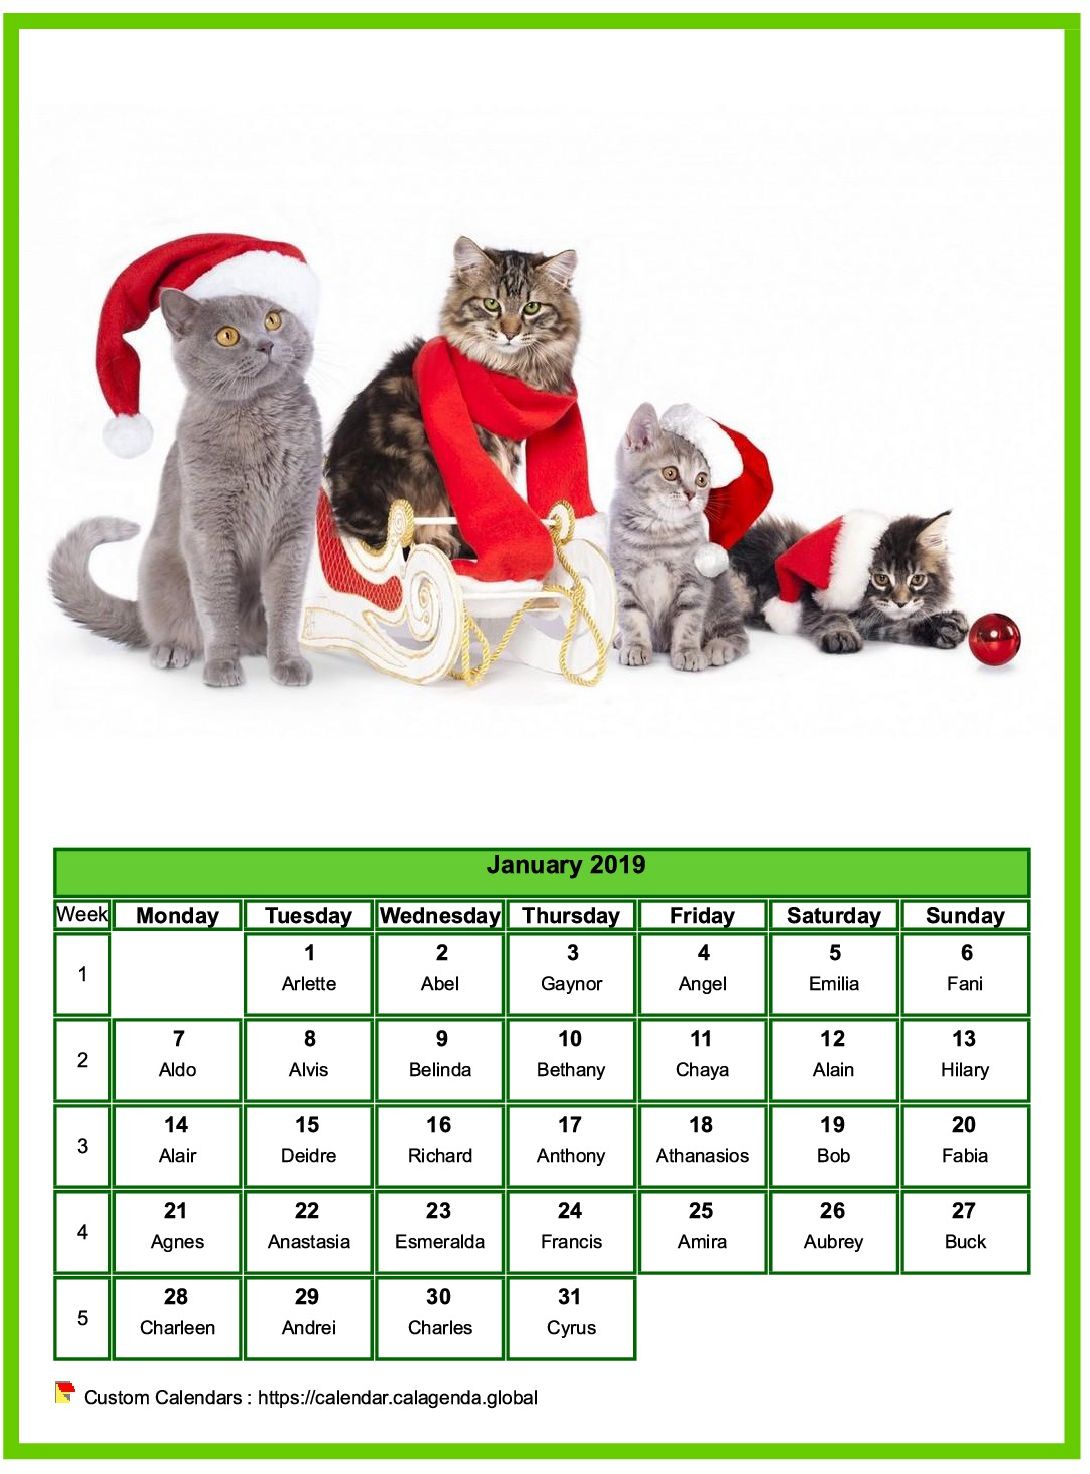 Calendar January 2019 cats